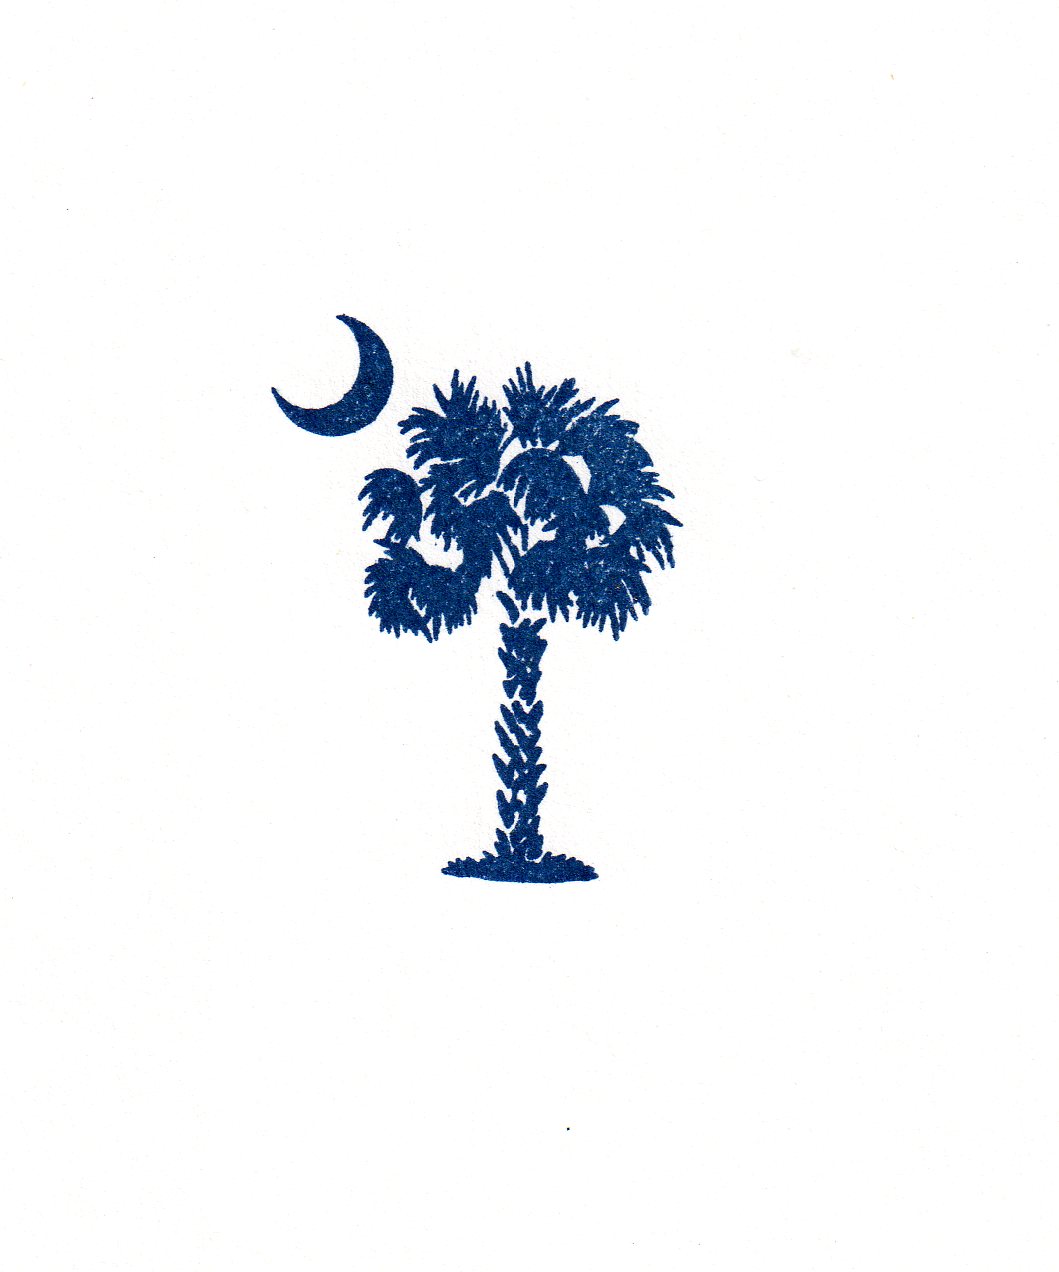 South Carolina Palmetto Tree Vector - ClipArt Best